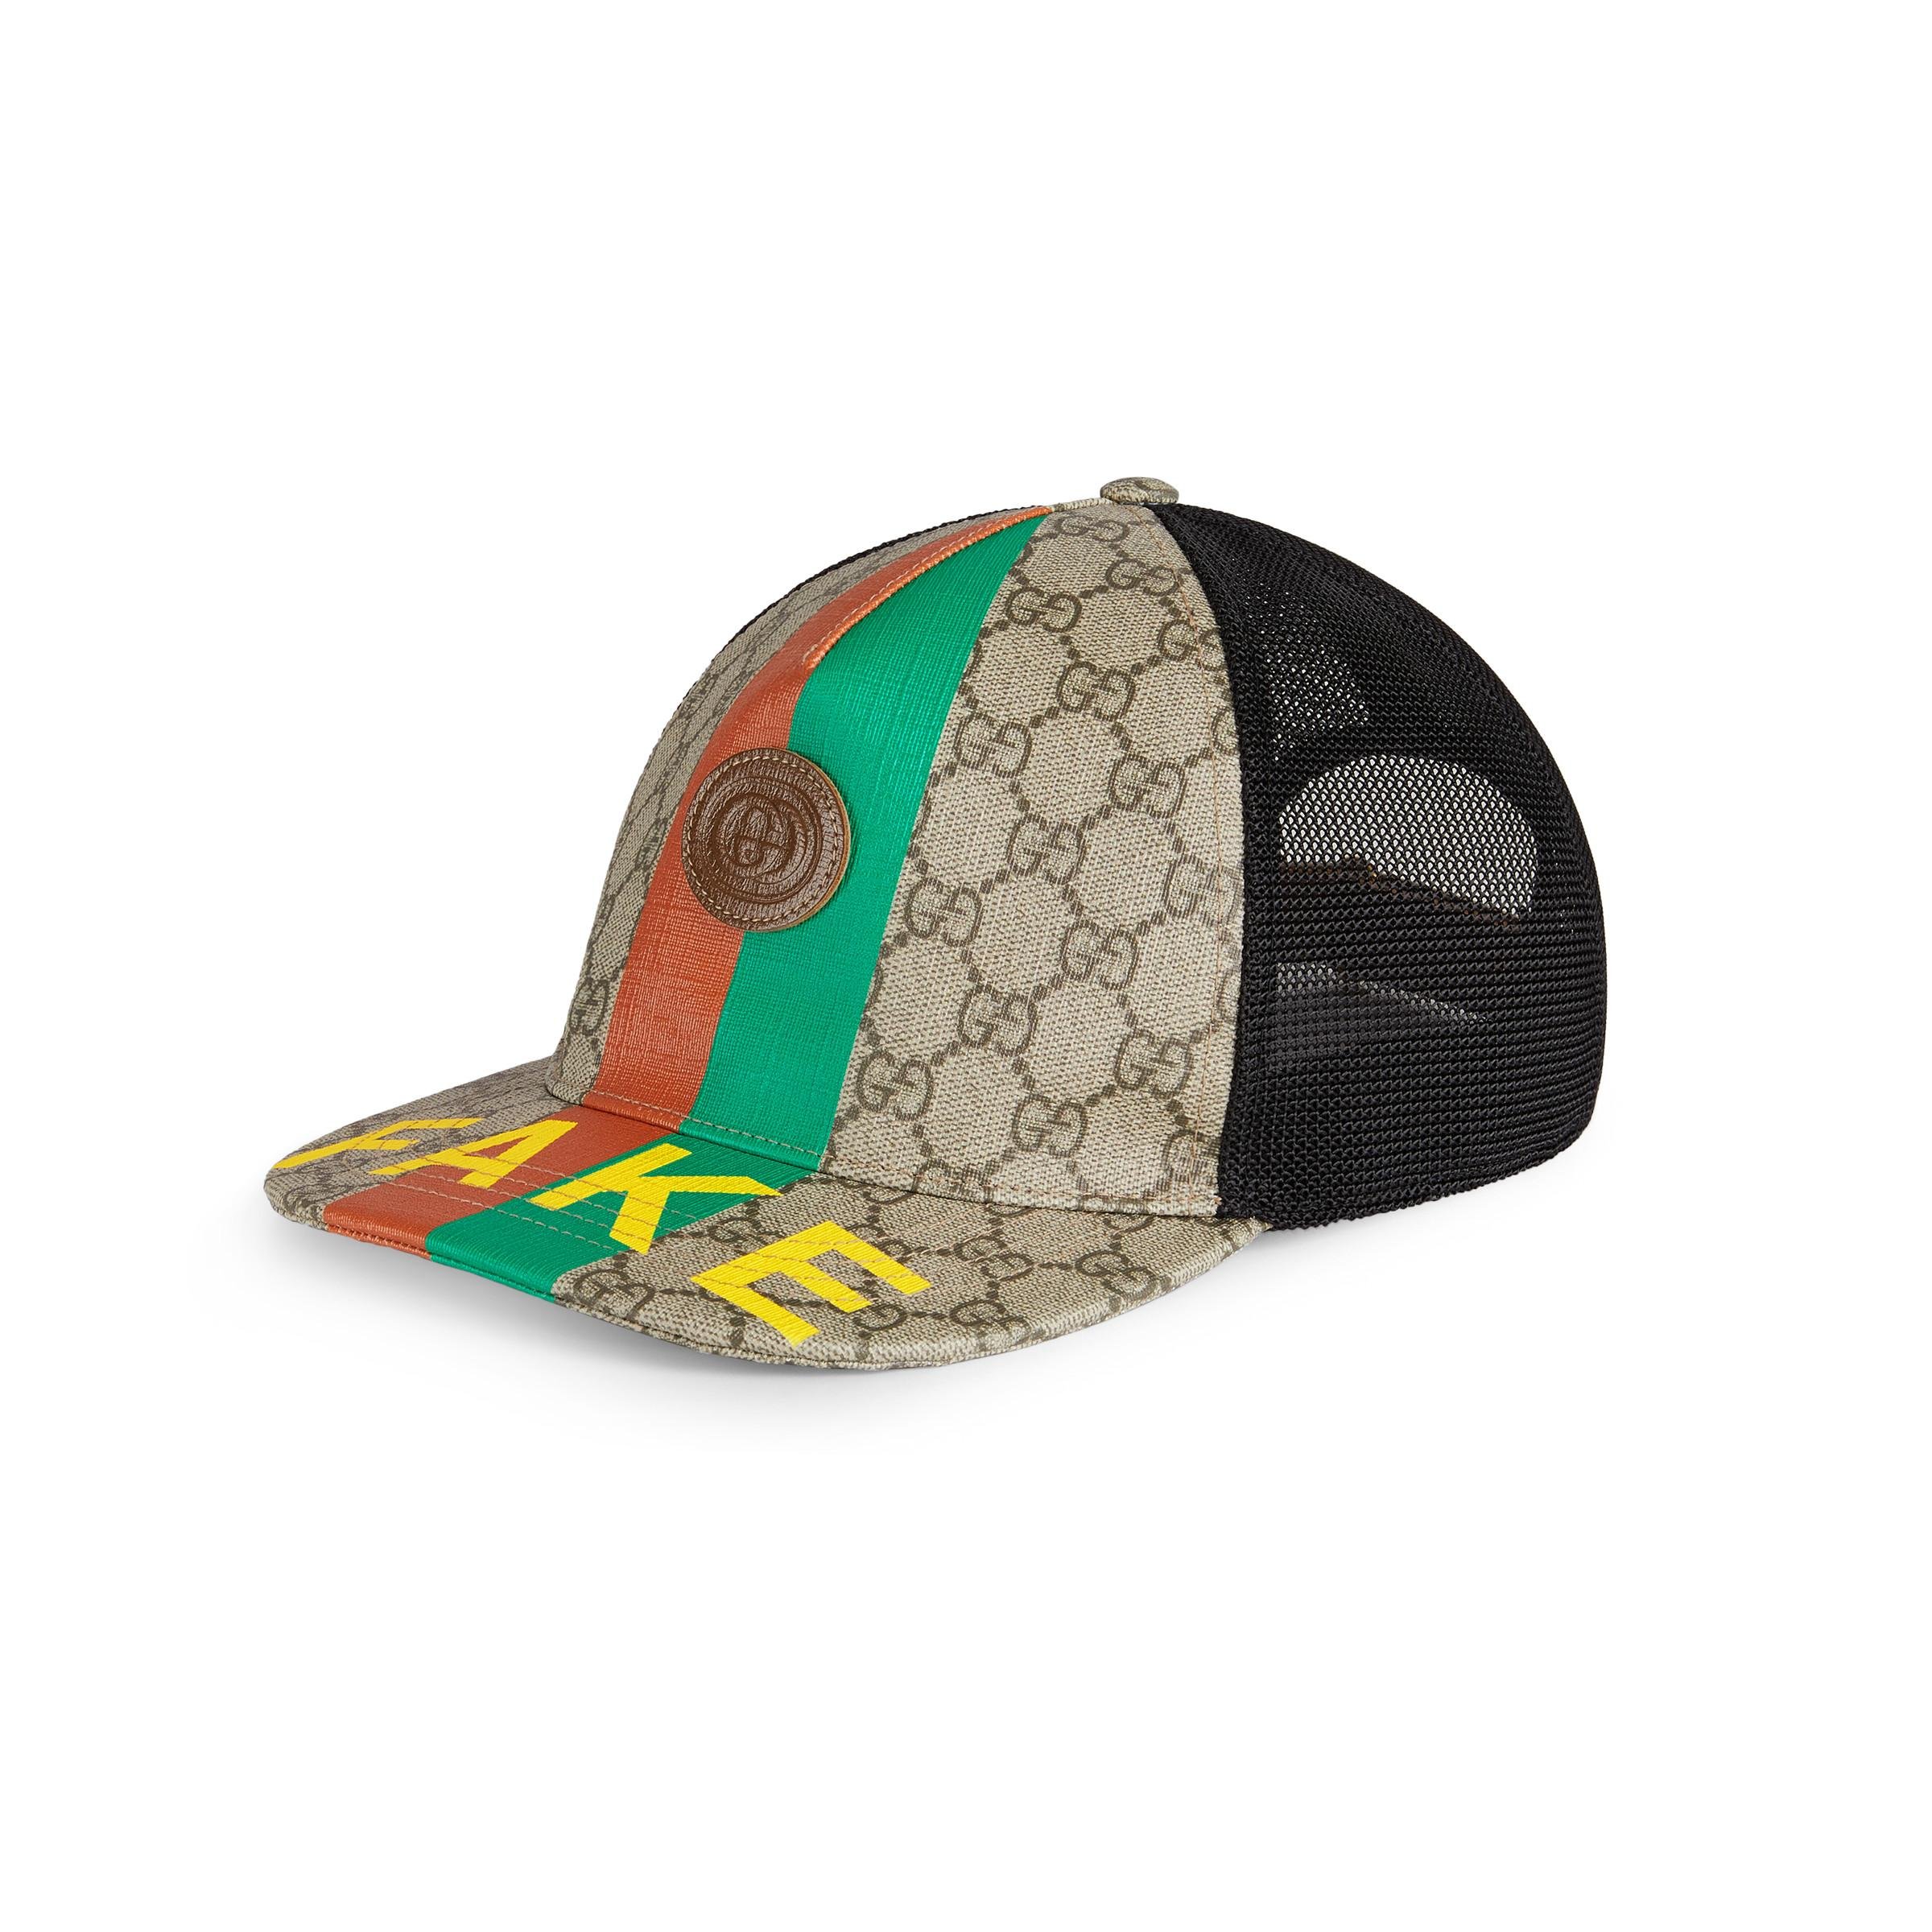 How to Spot Fake Gucci Casquette Cap Hat 